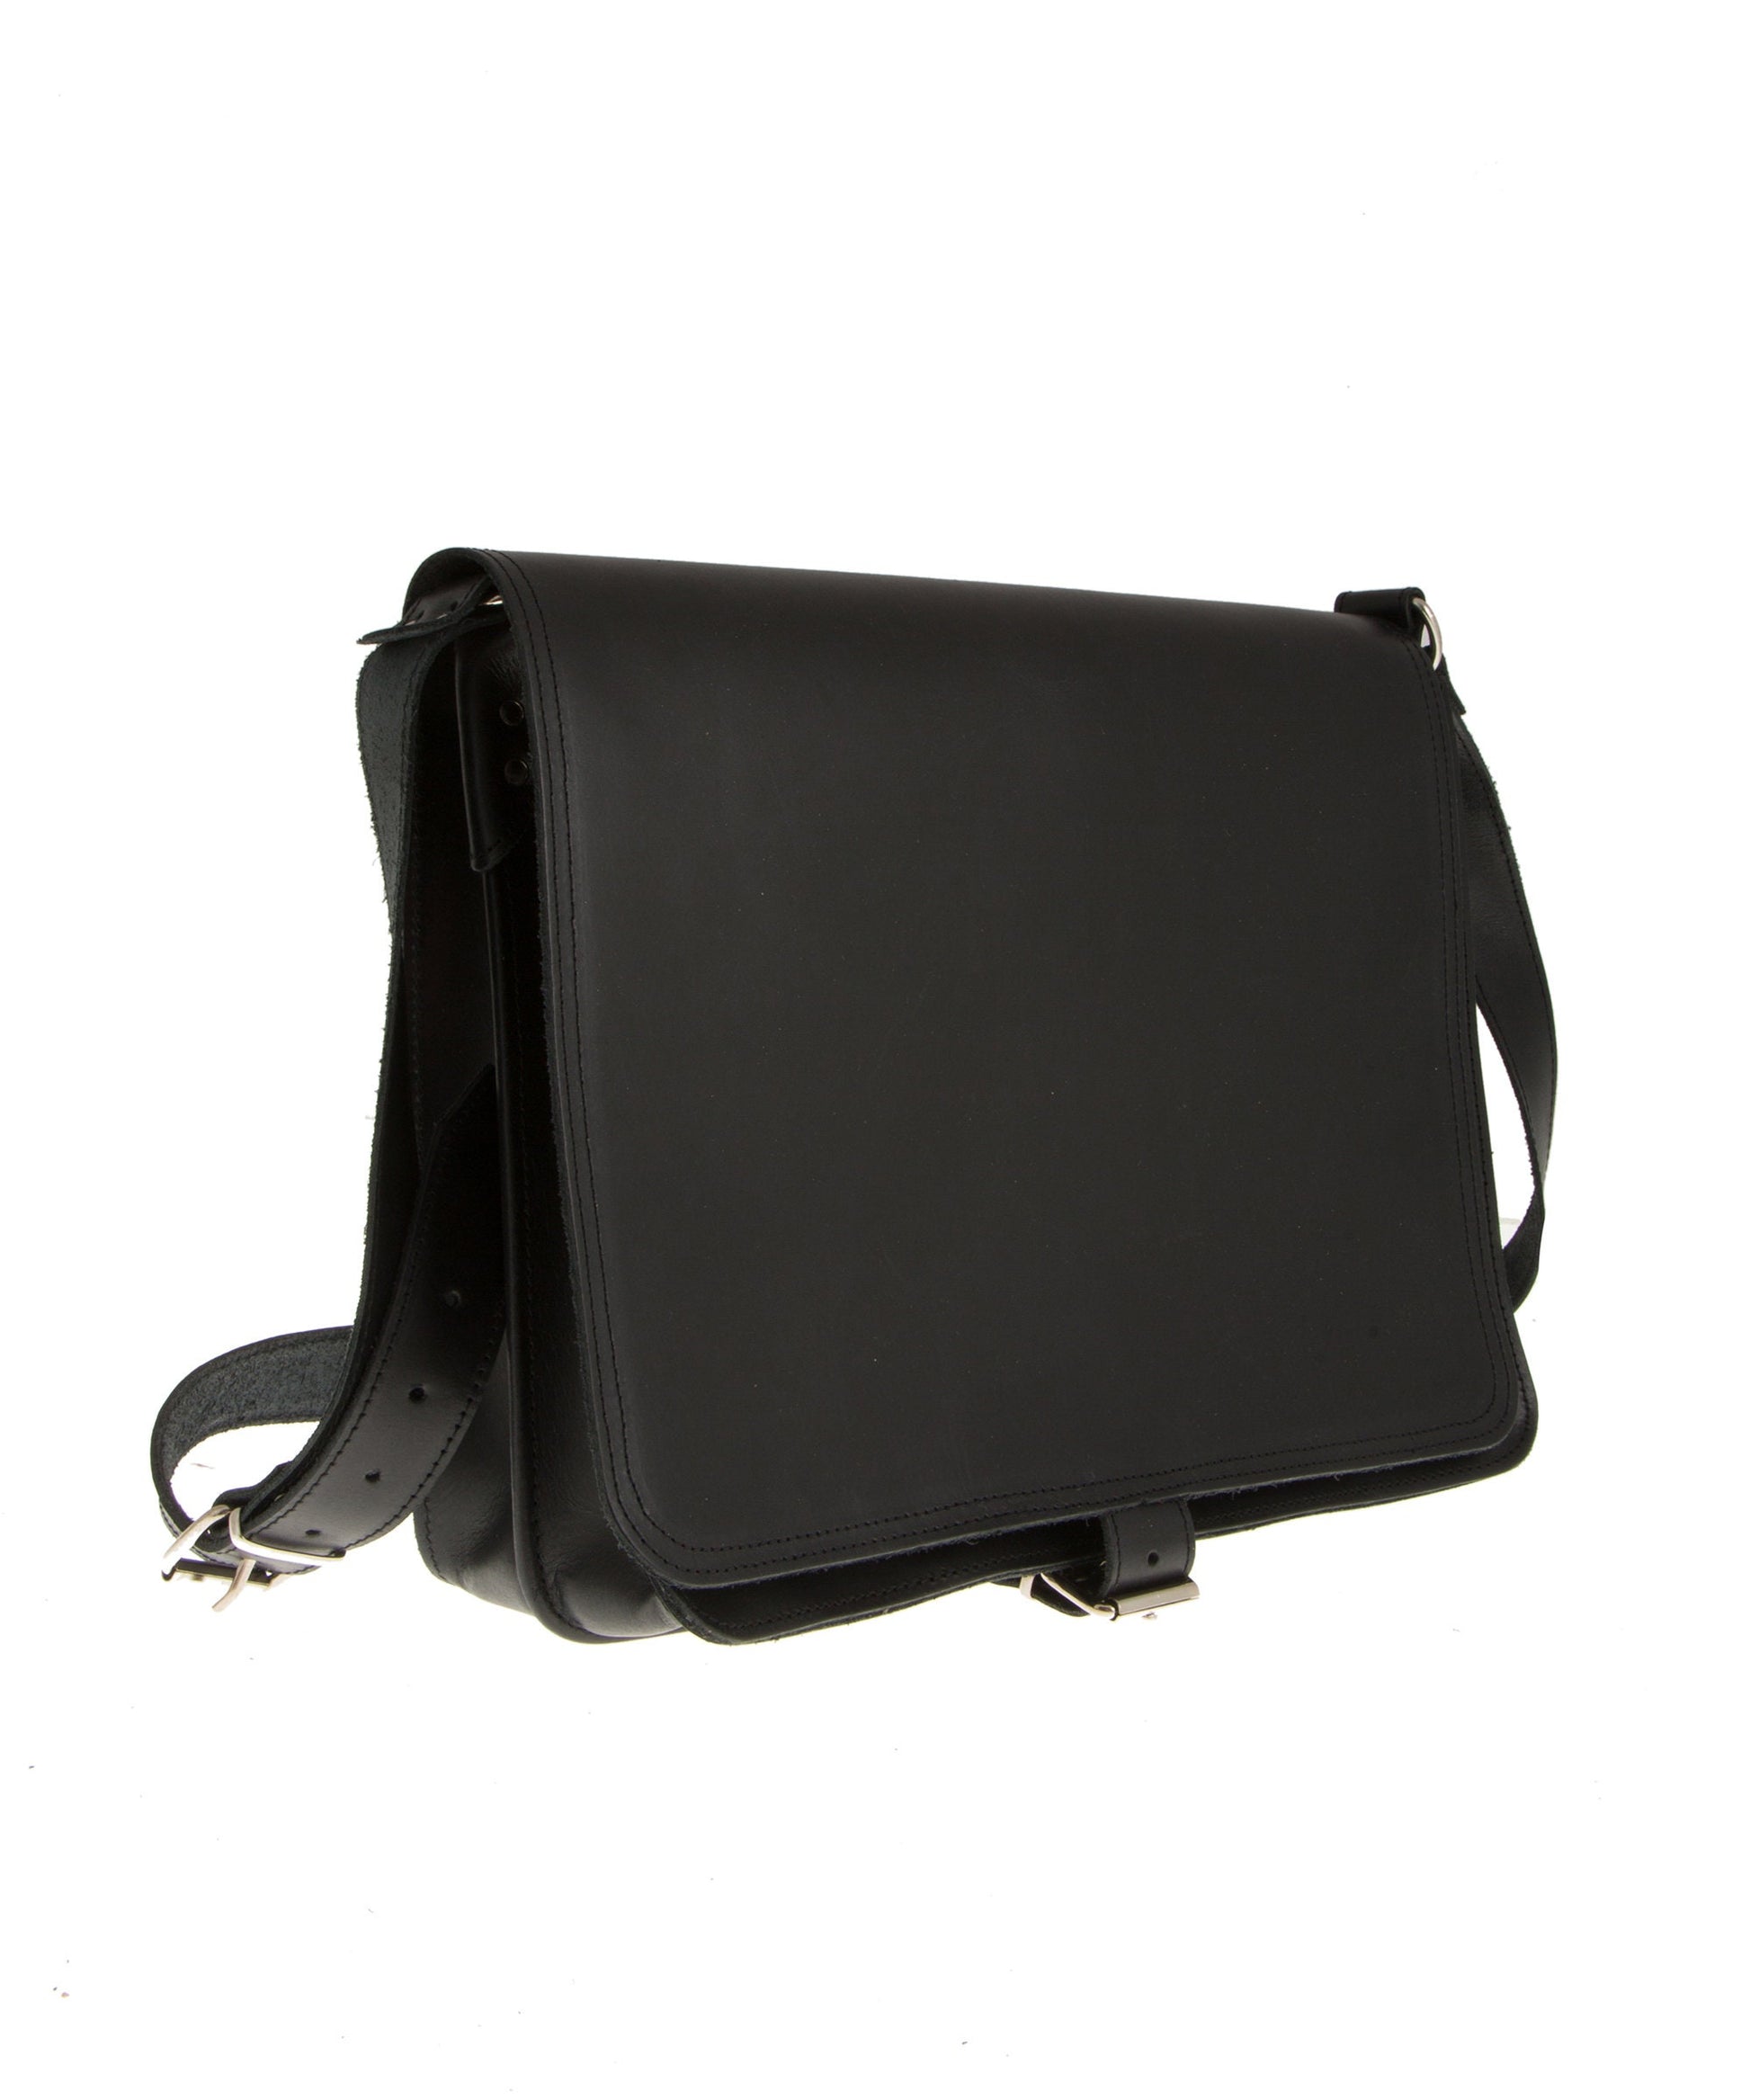 Leather messenger bag women, Leather cross body bag women, Leather breifcase, Leather laptop bag